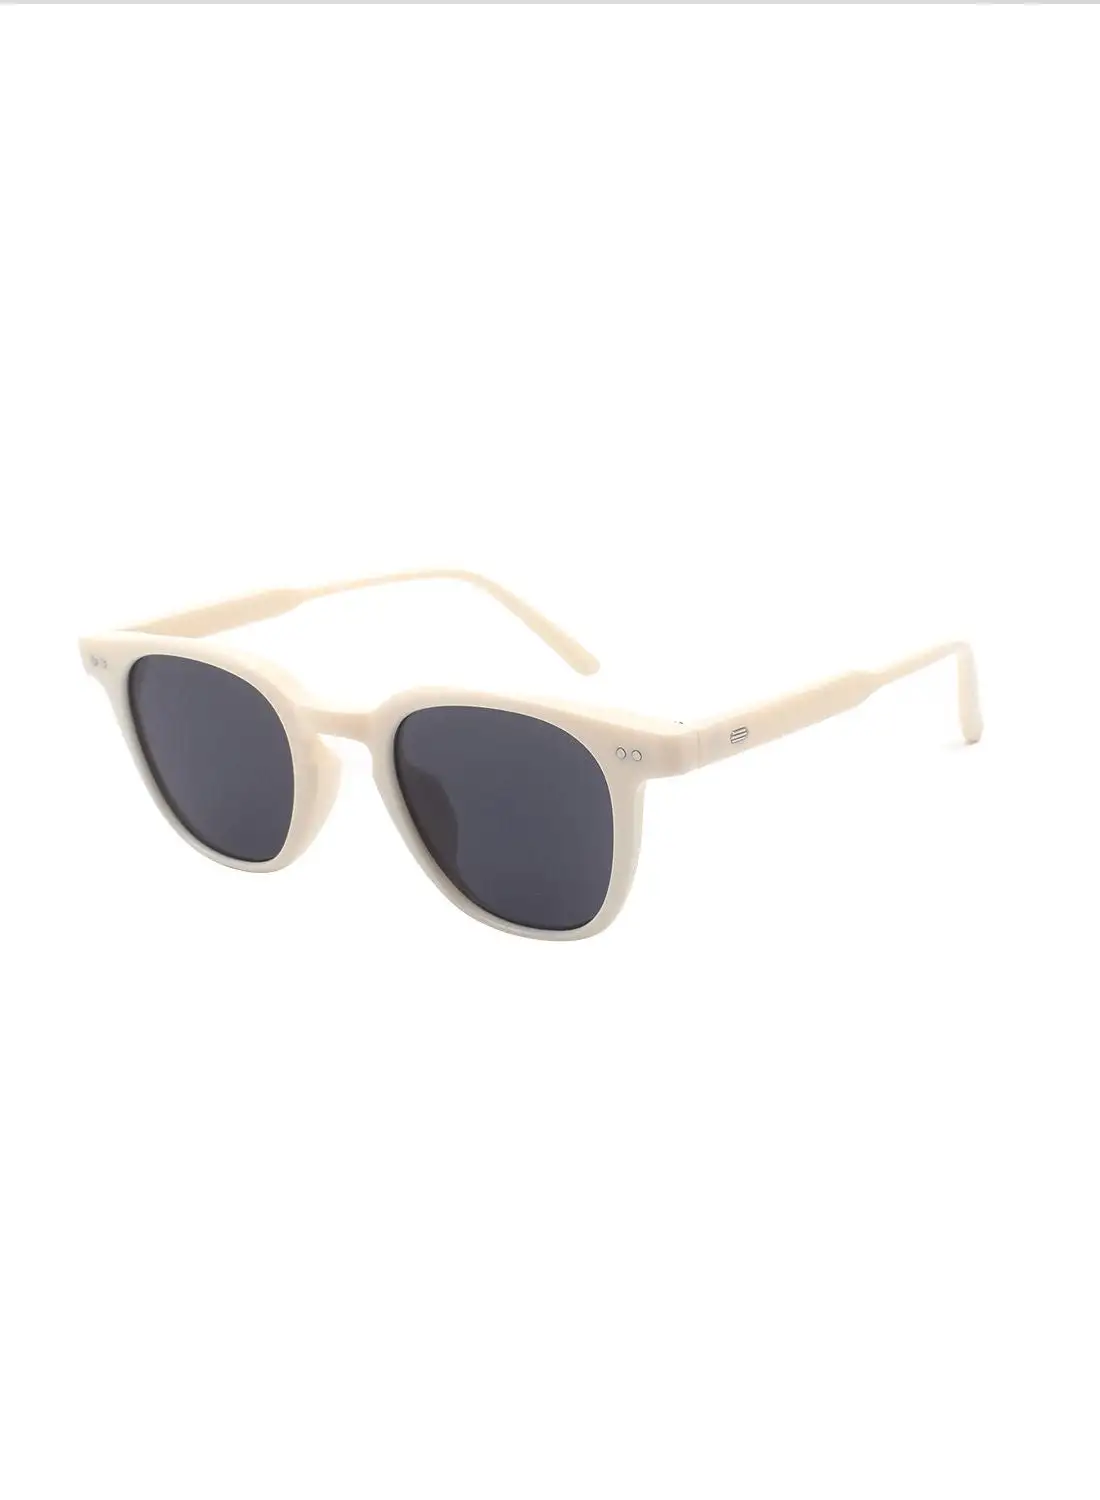 MADEYES Square Sunglasses EE20X062-3